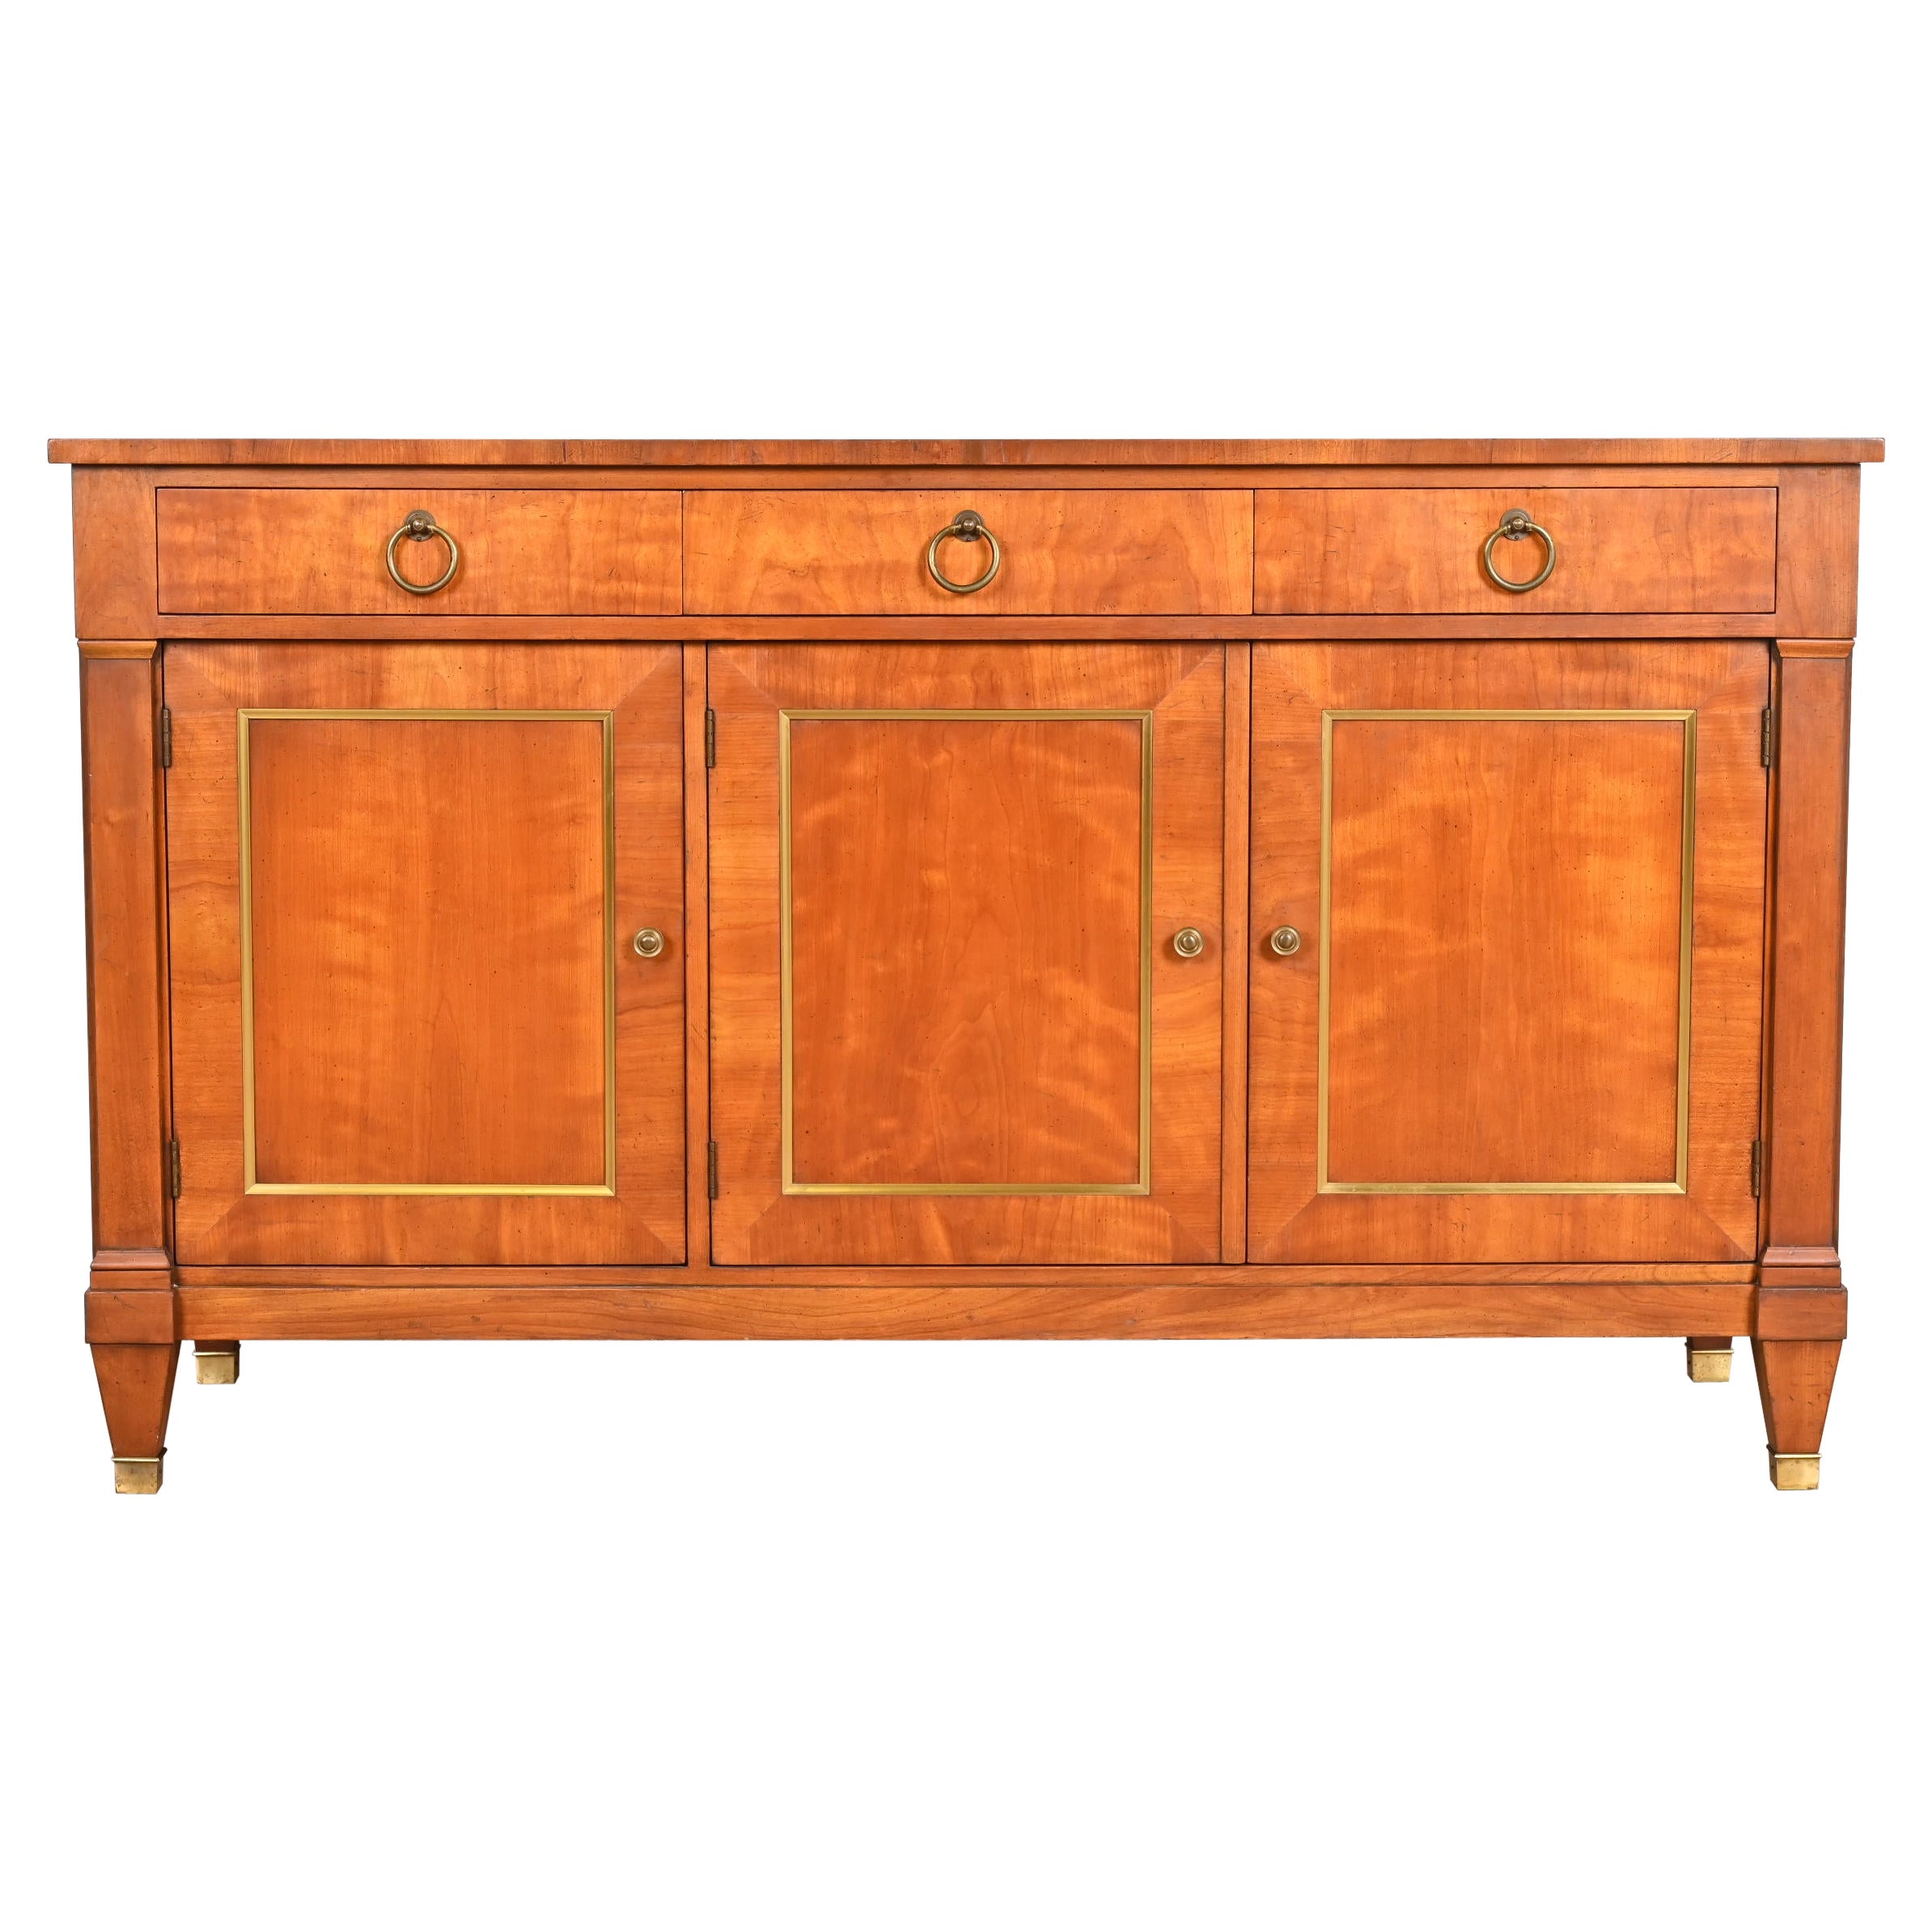 Kindel Furniture French Regency Louis XVI Cherry Wood Sideboard or Bar Cabinet